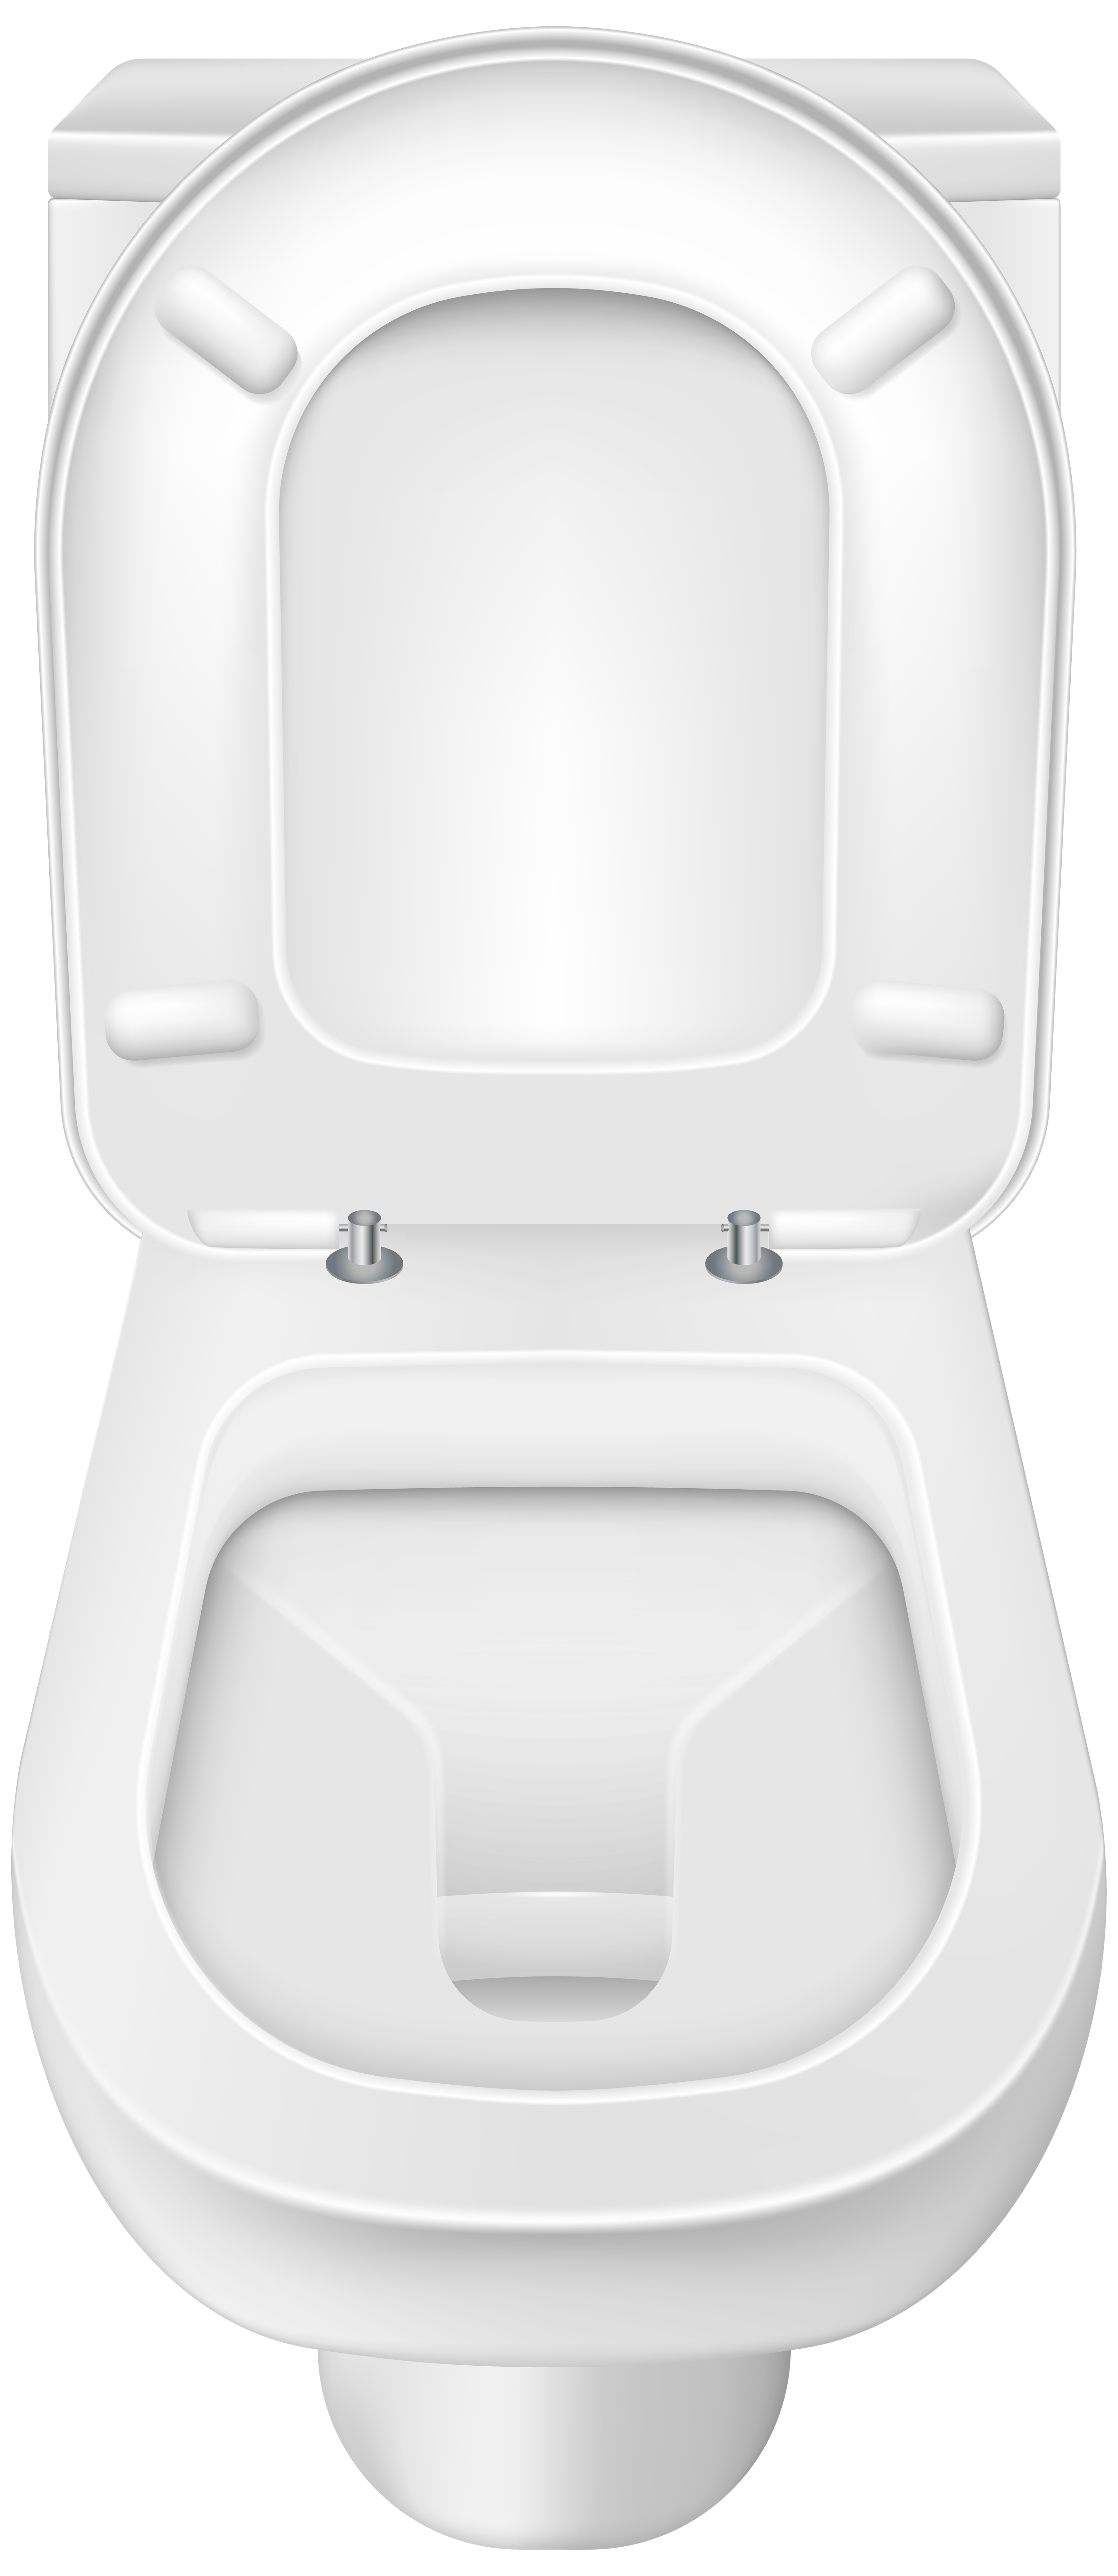 clipart bathroom potty seat